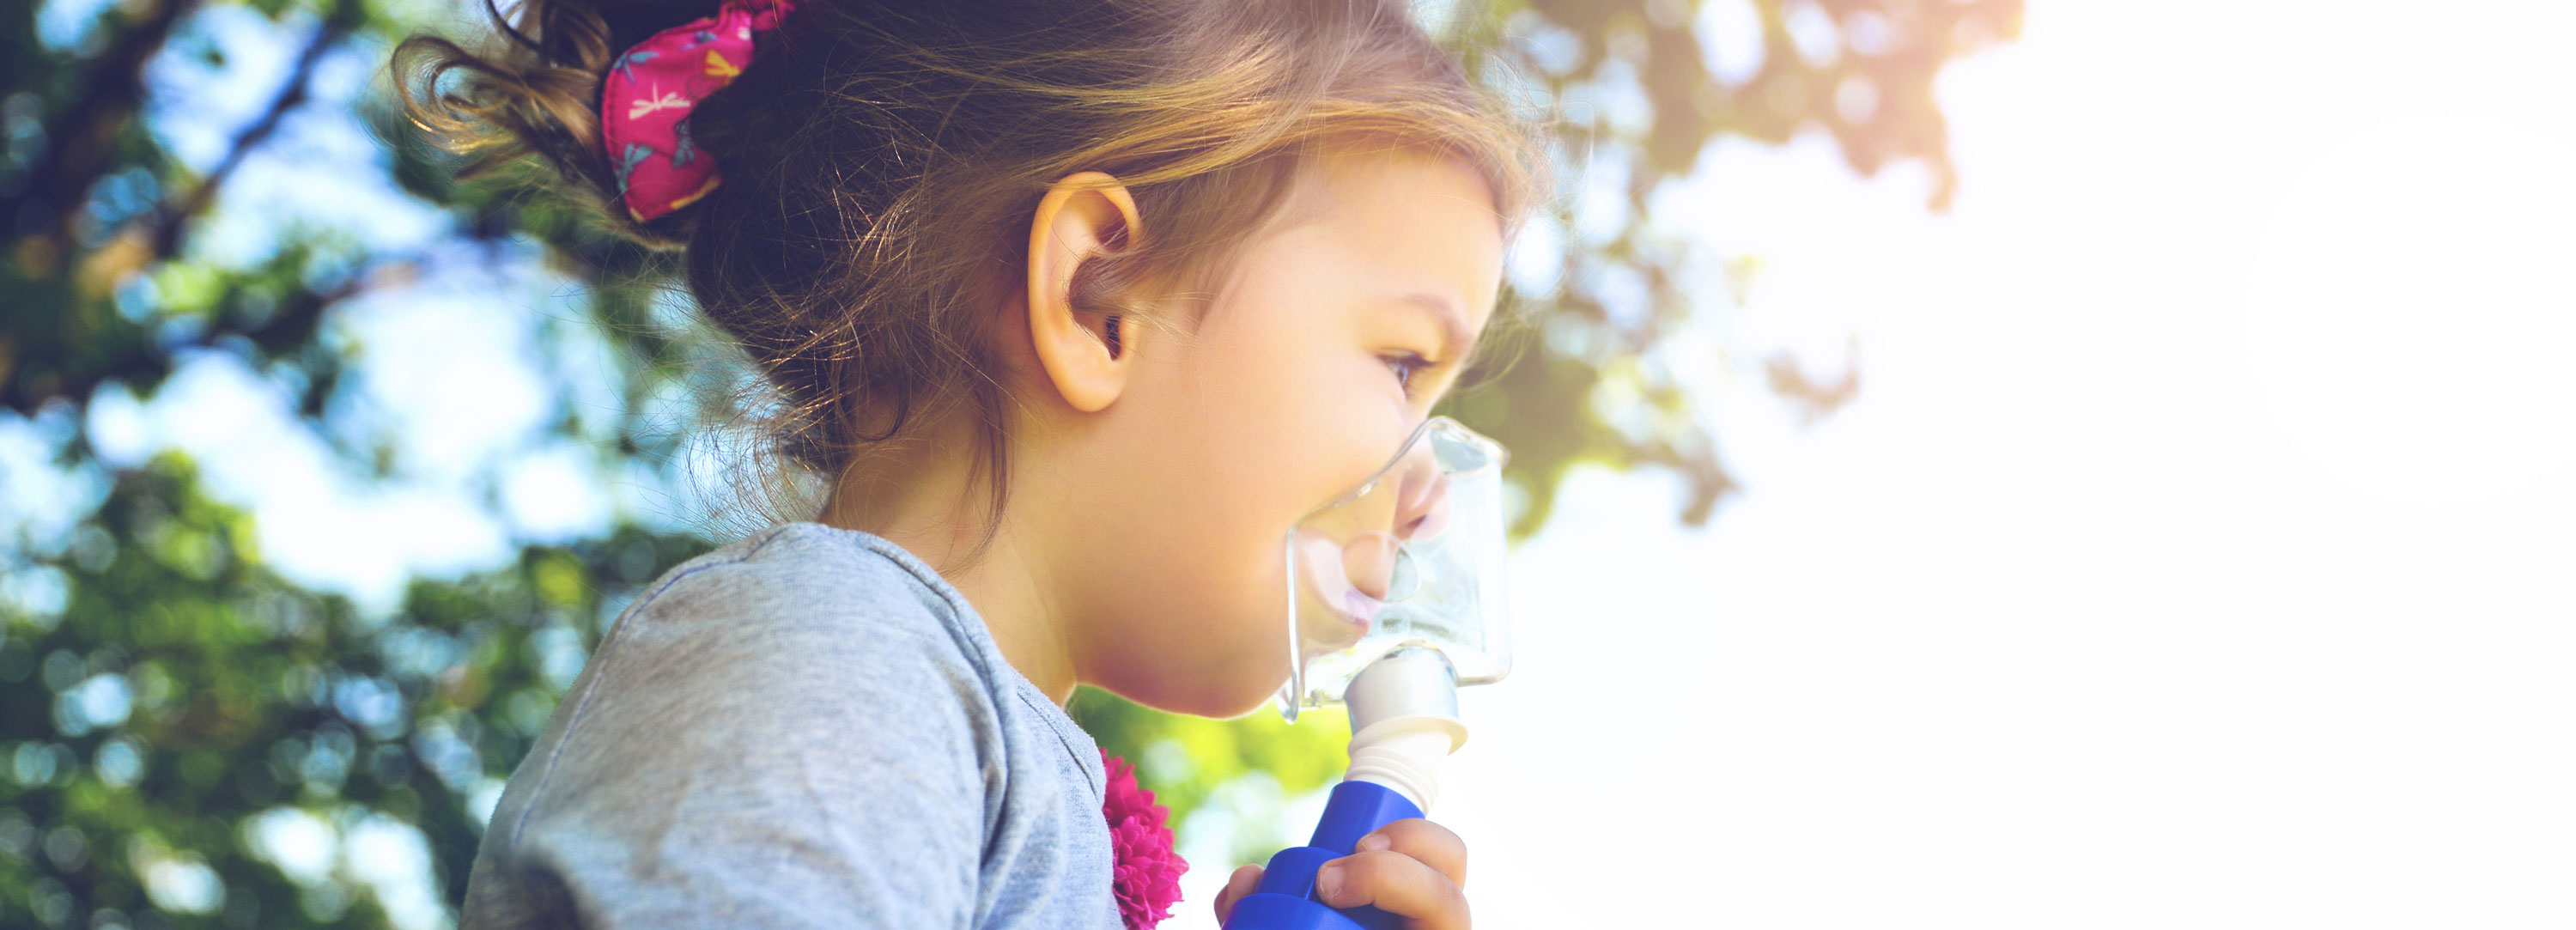 little girl holding asthma inhaler up to nose